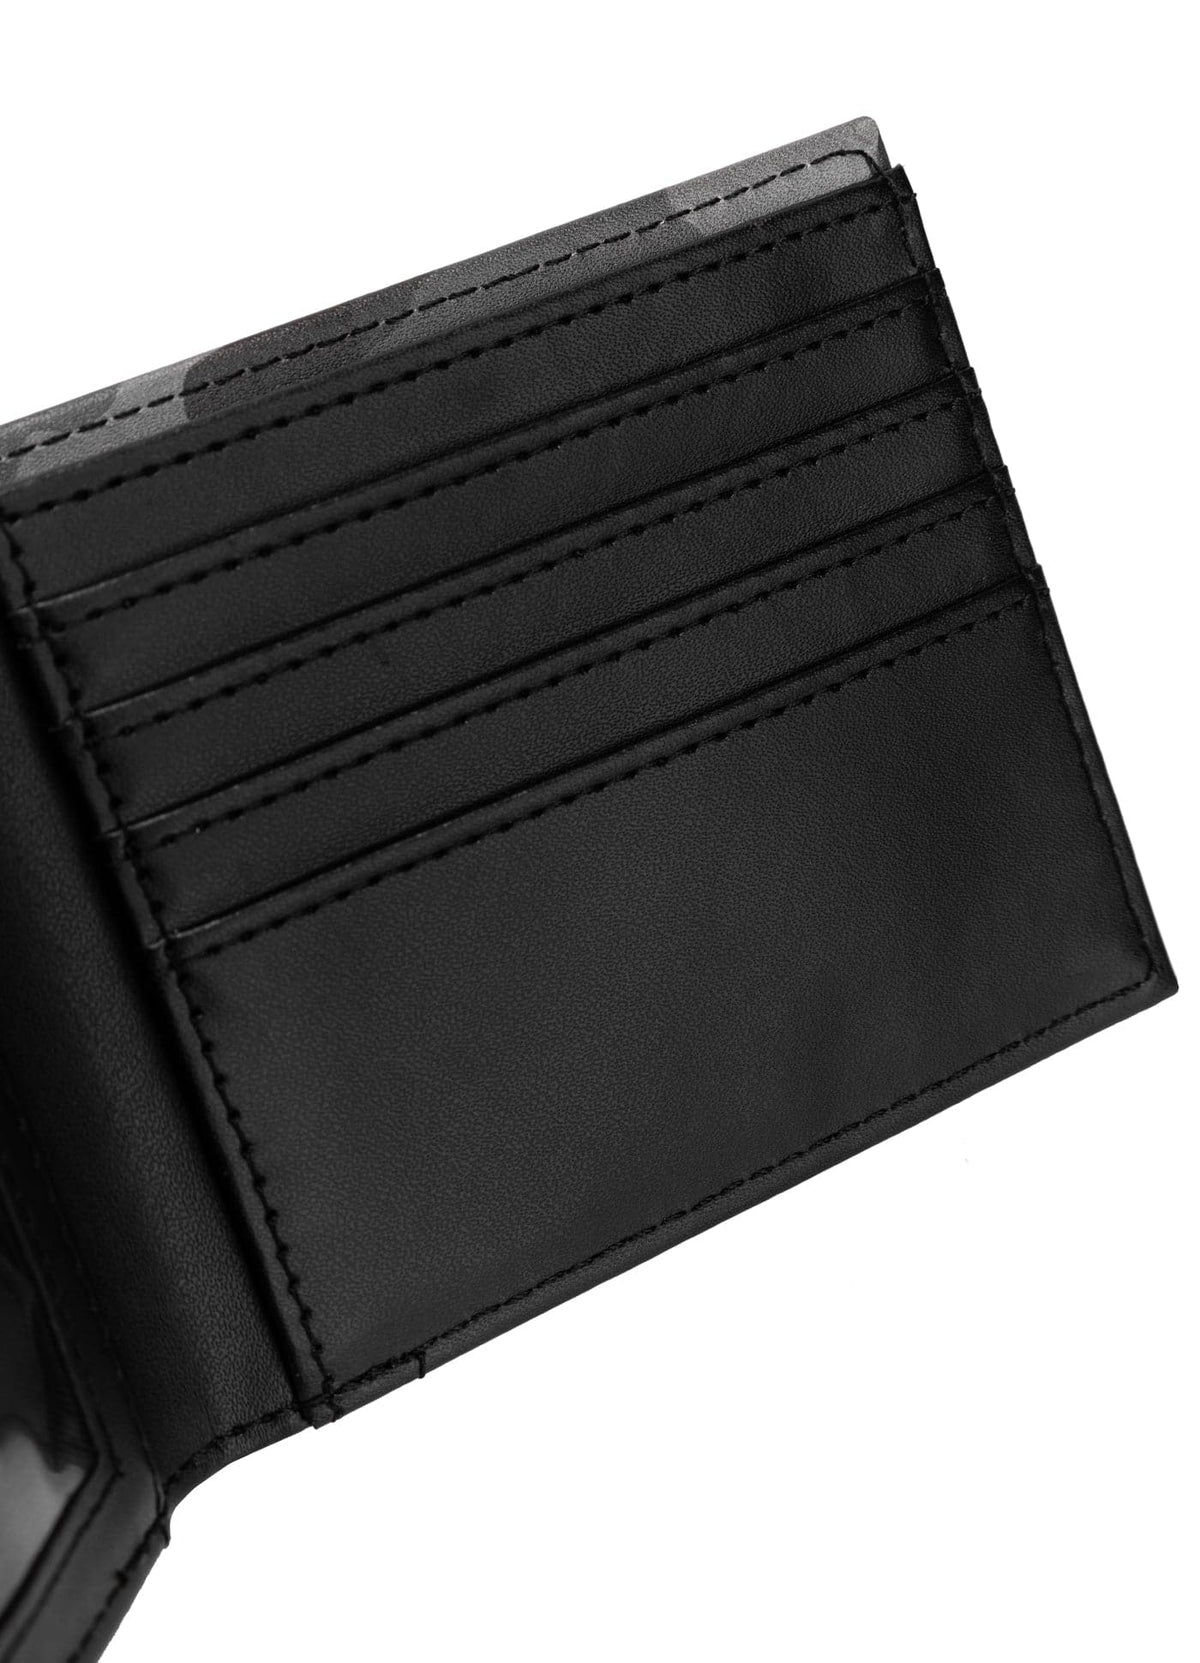 CROSS CAMO Grey Leather Wallet